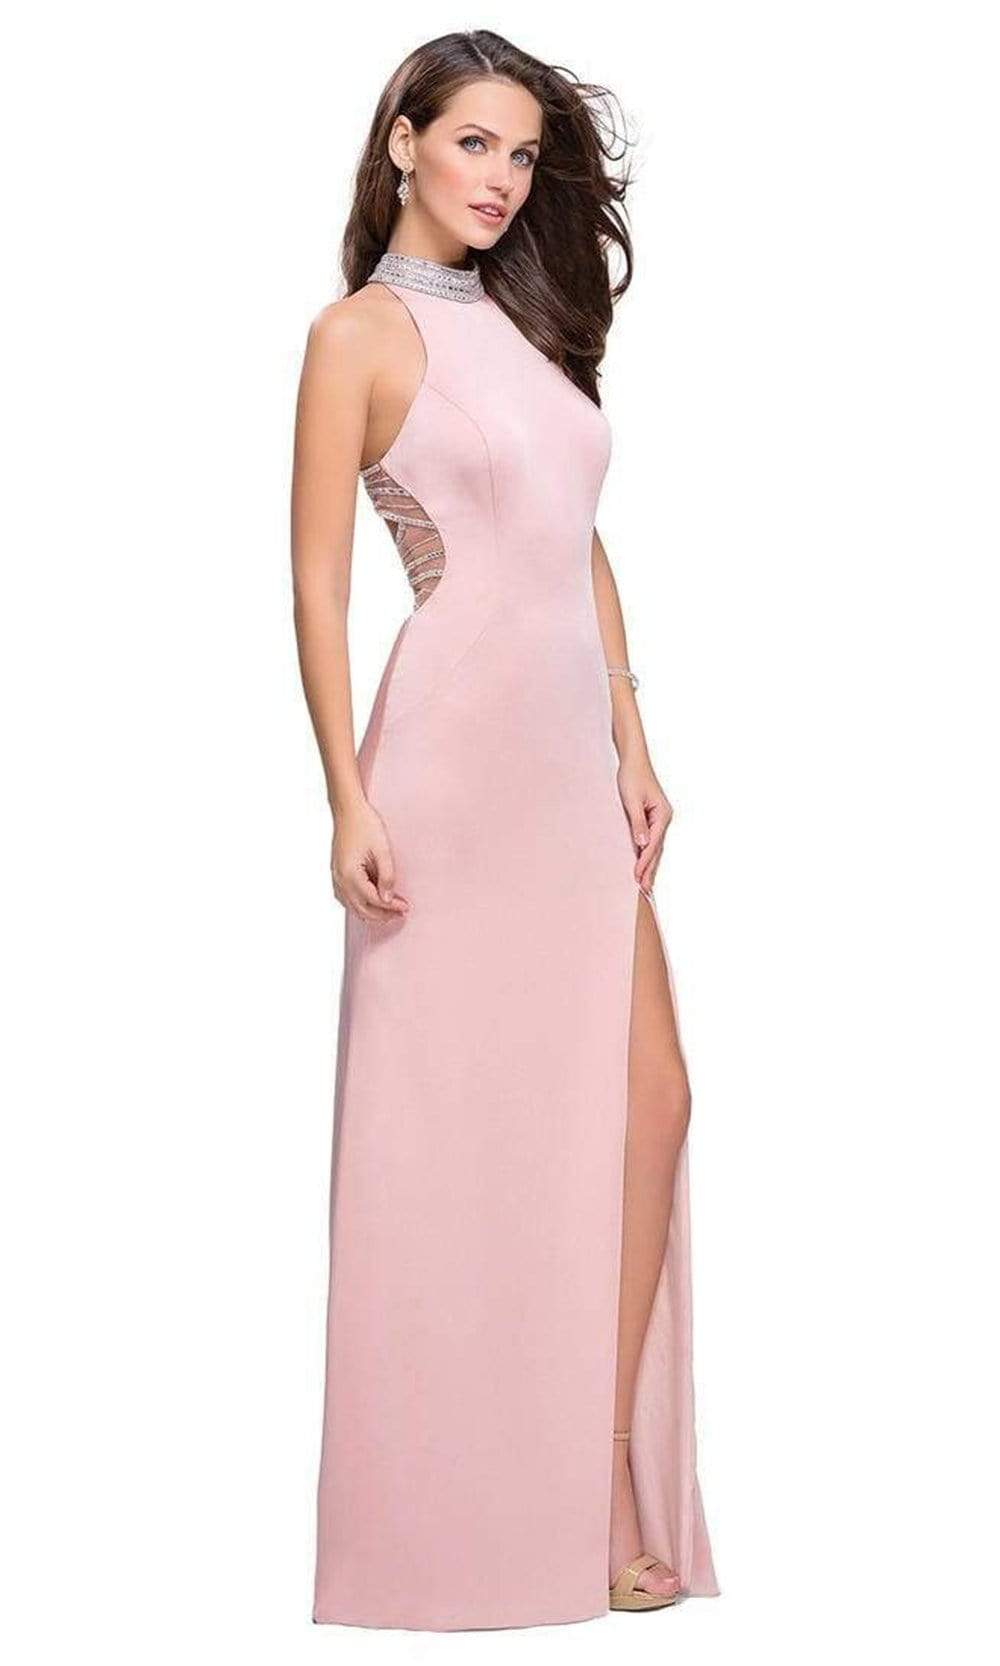 La Femme - Sleeveless High Halter Sheath Dress 25767SC - 1 pc Blush In Size 2 Available CCSALE 2 / Blush